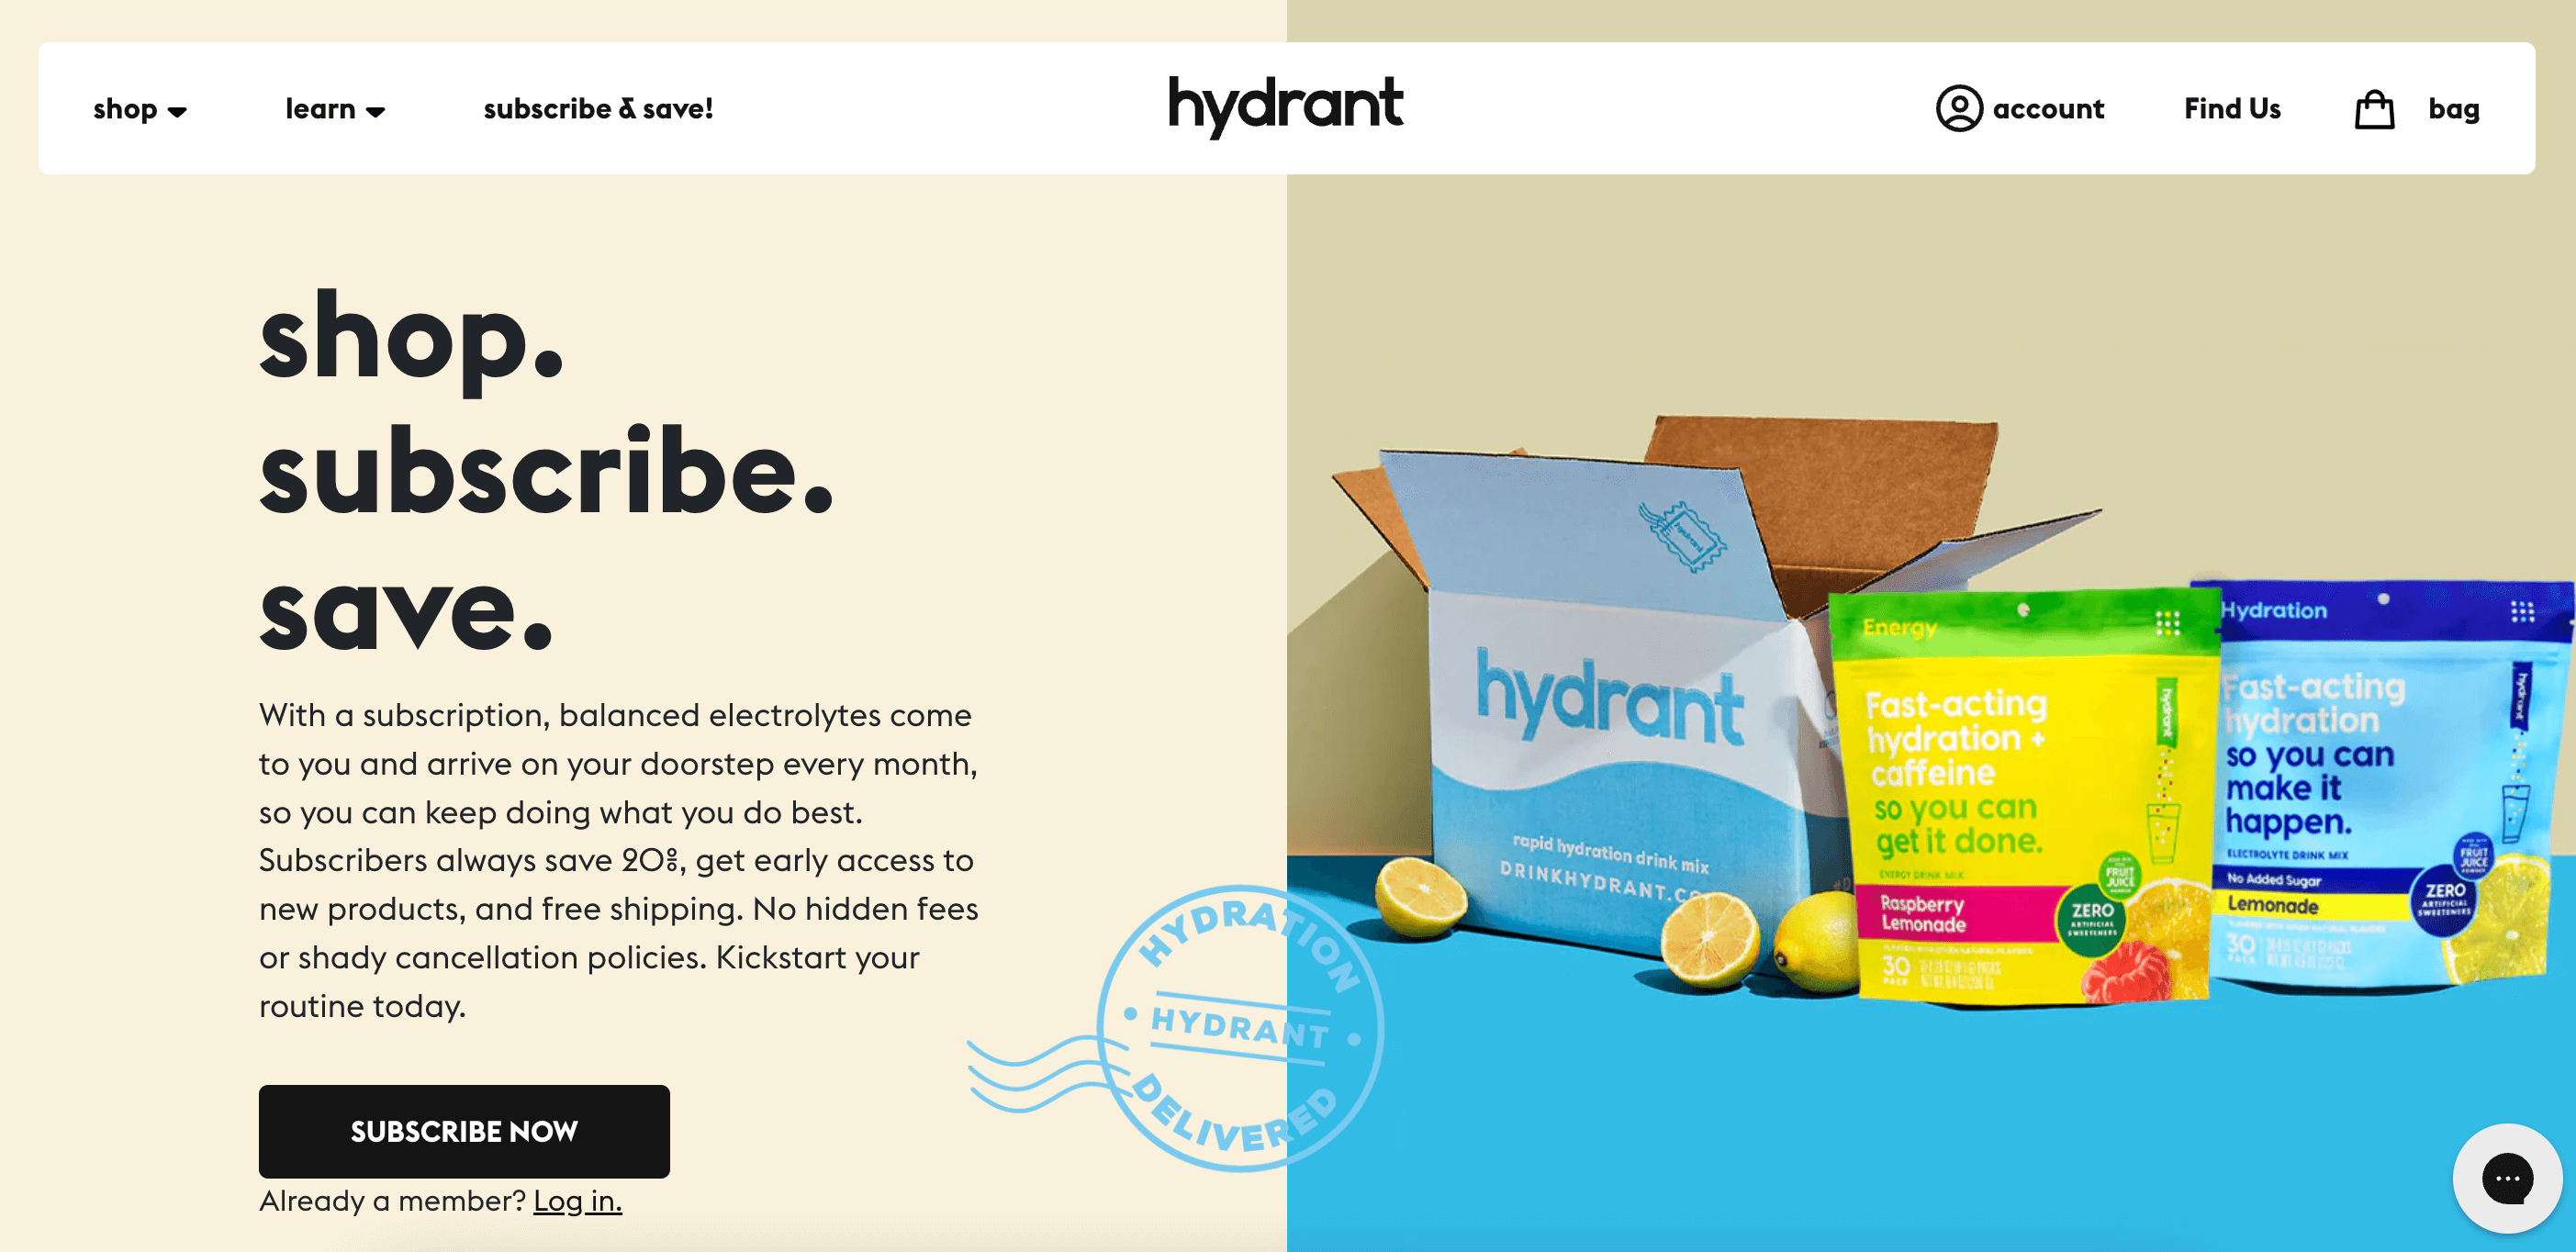 hydrant subscription webpage screenshot